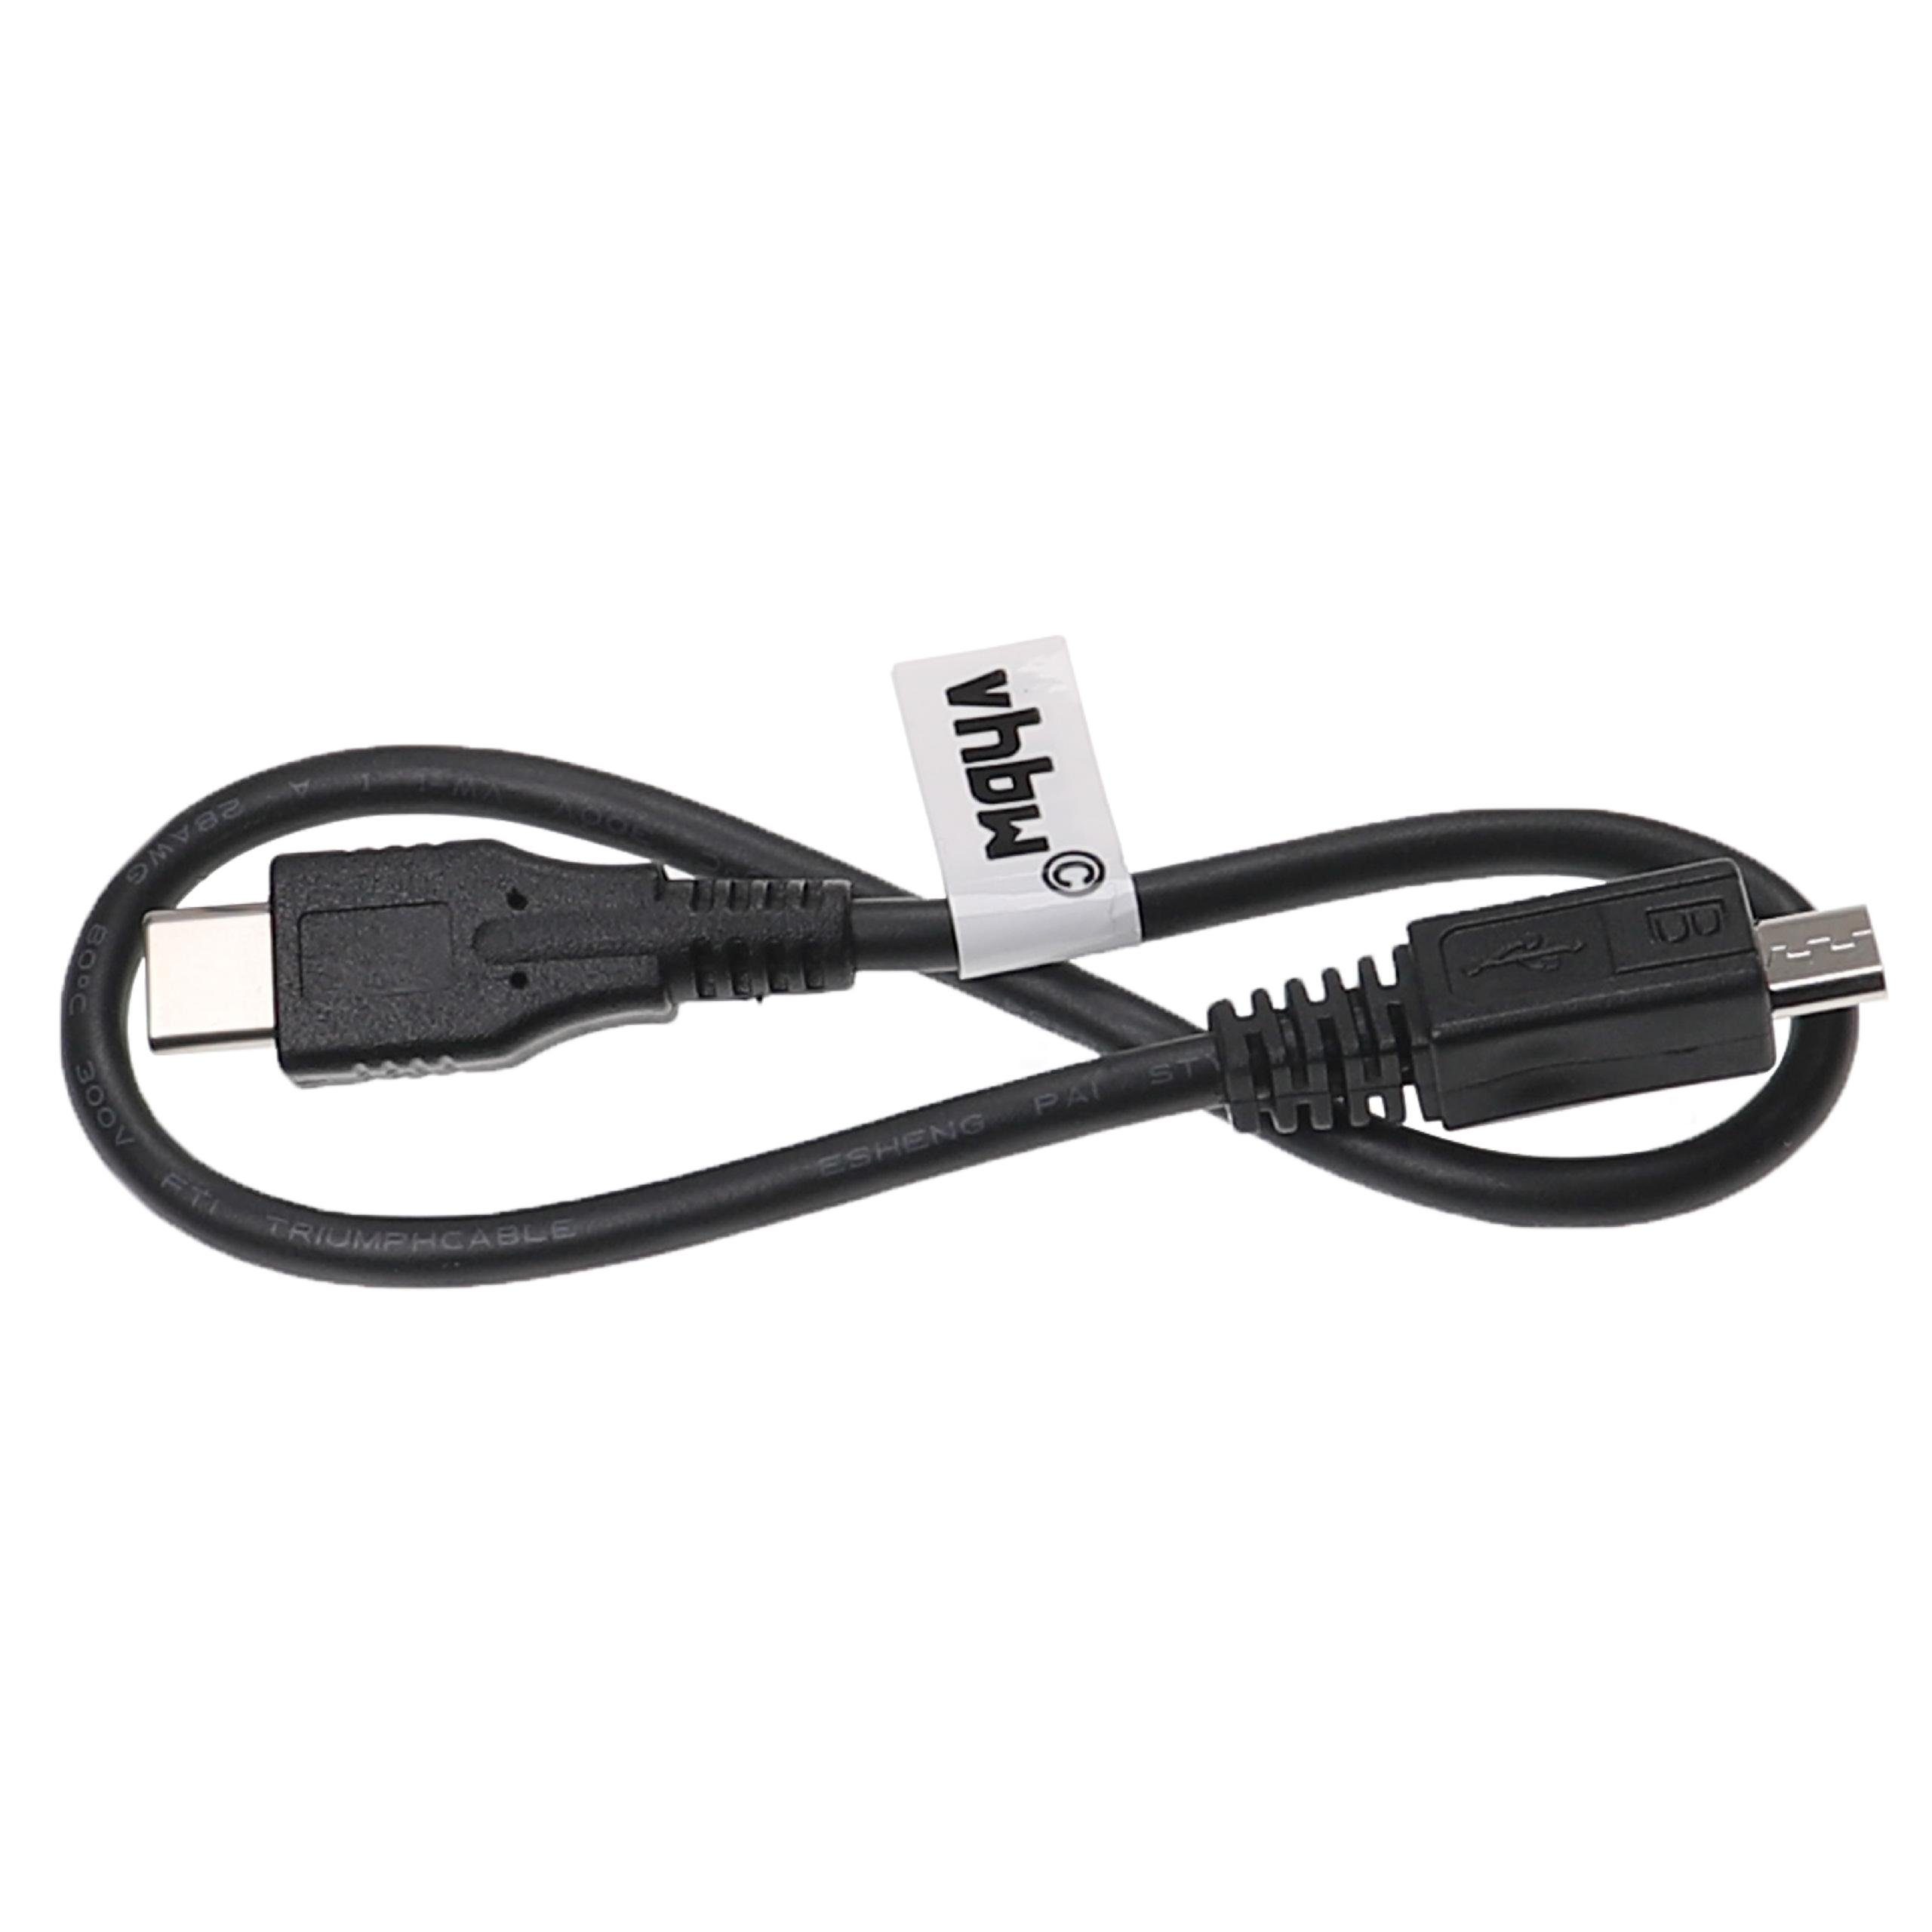 vhbw für Tablet / Notebook / Computer / Smartphone USB-Kabel, Micro-USB